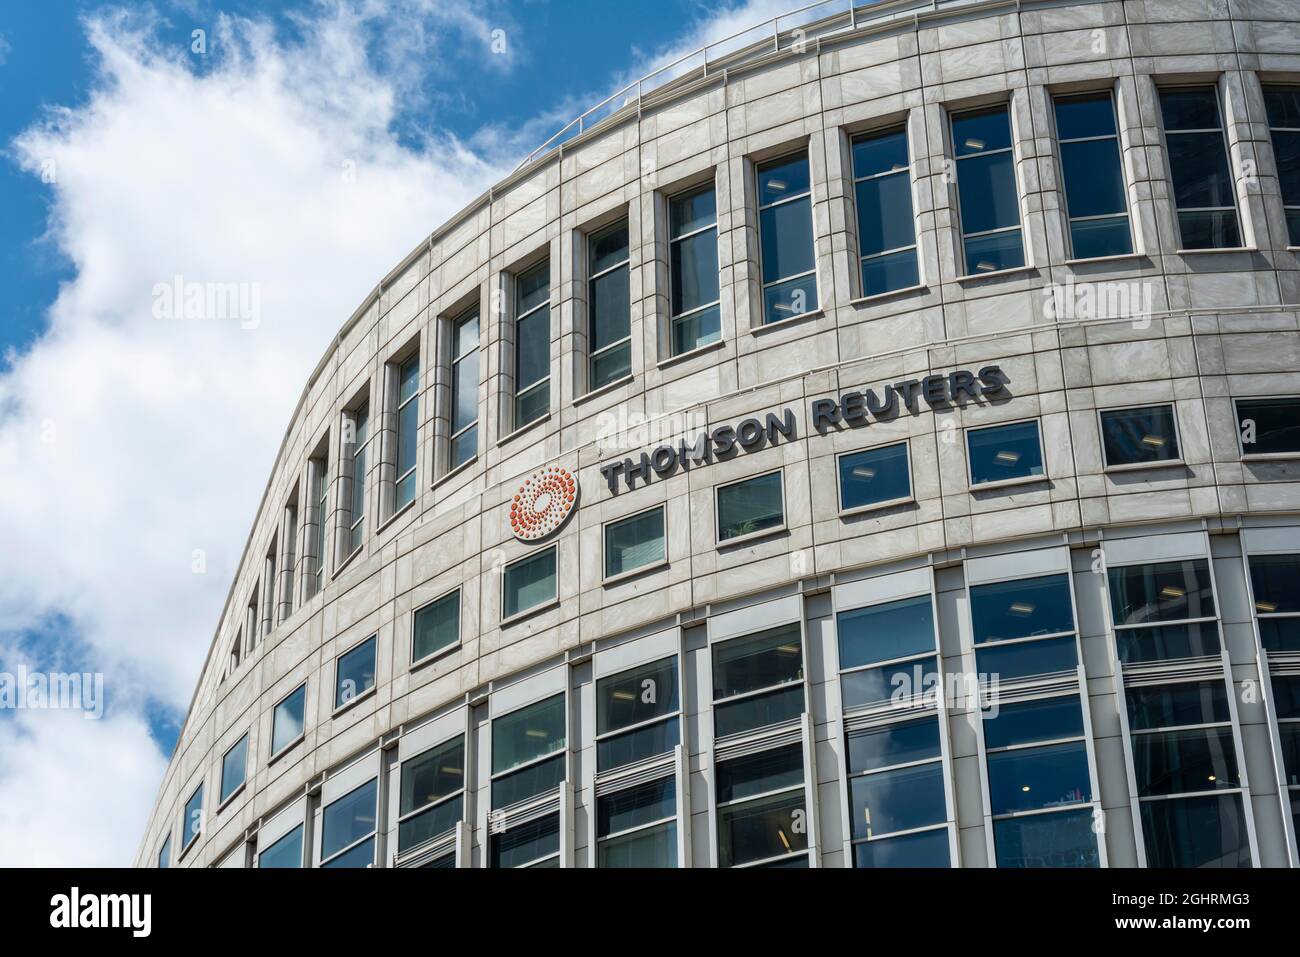 Thomson Reuters Building, One Canada Square, Canary Wharf, London, England, United Kingdom Stock Photo